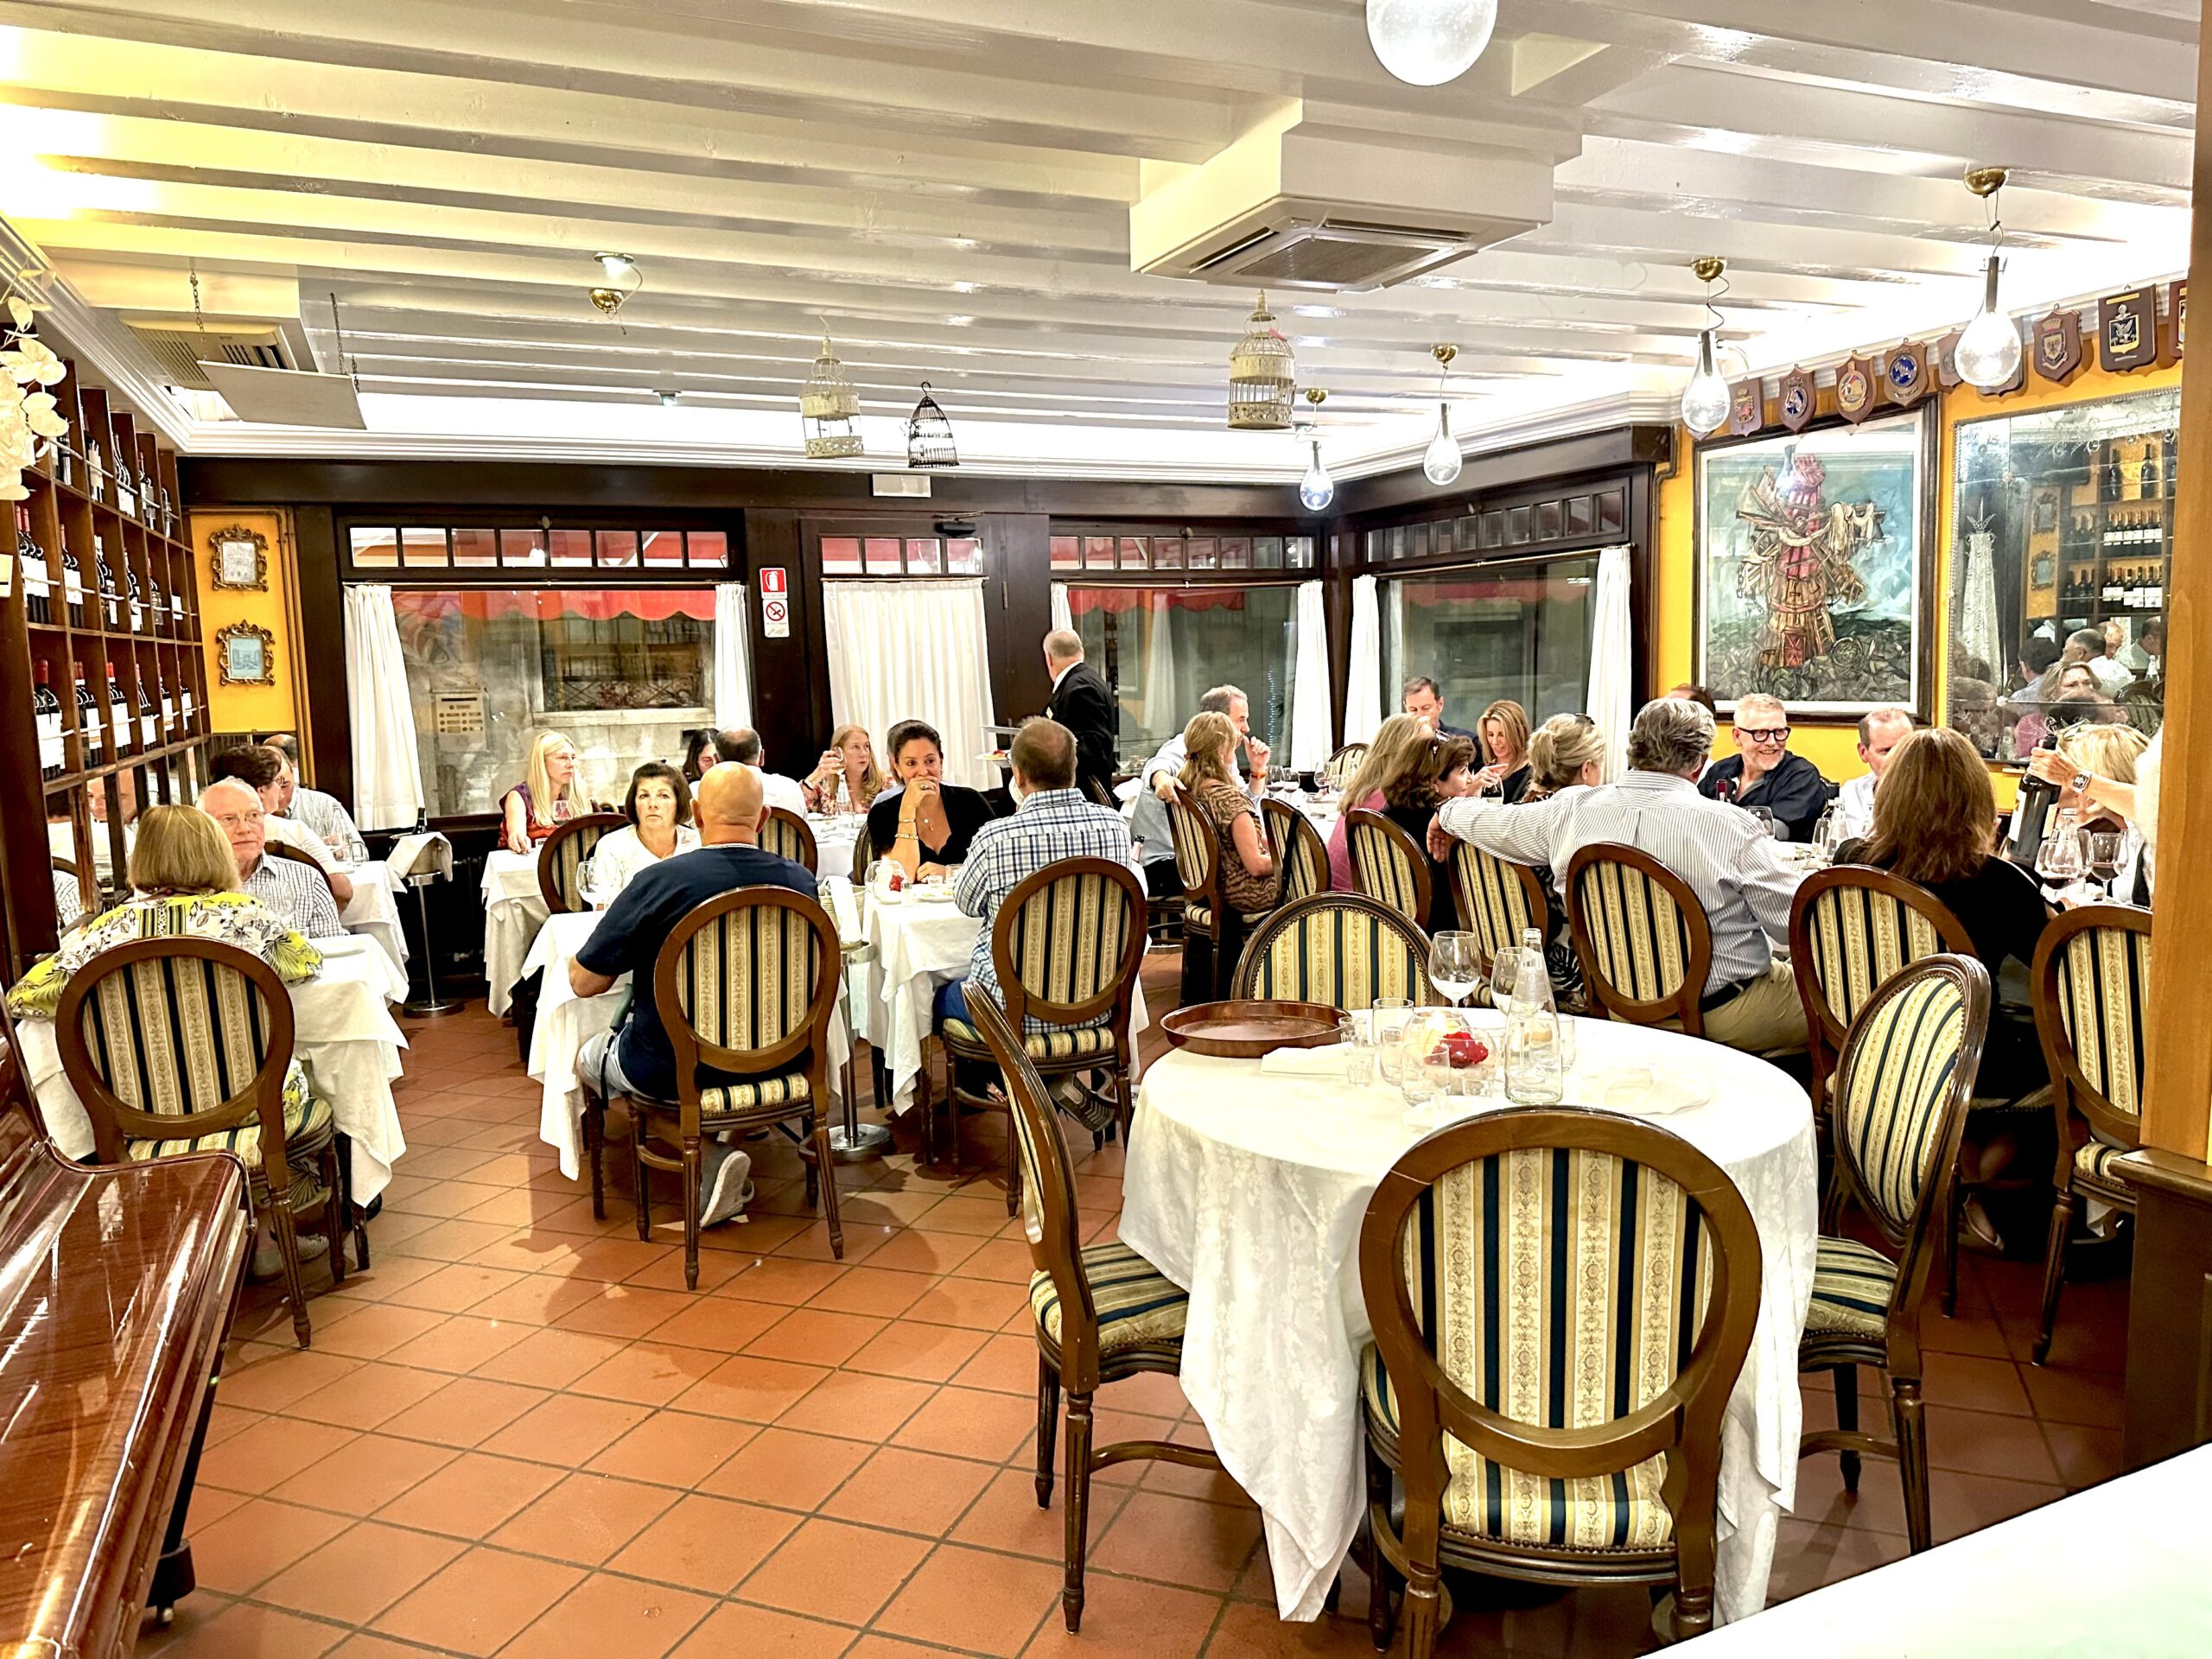 the dining room at Ristorante Vecia Cavàna